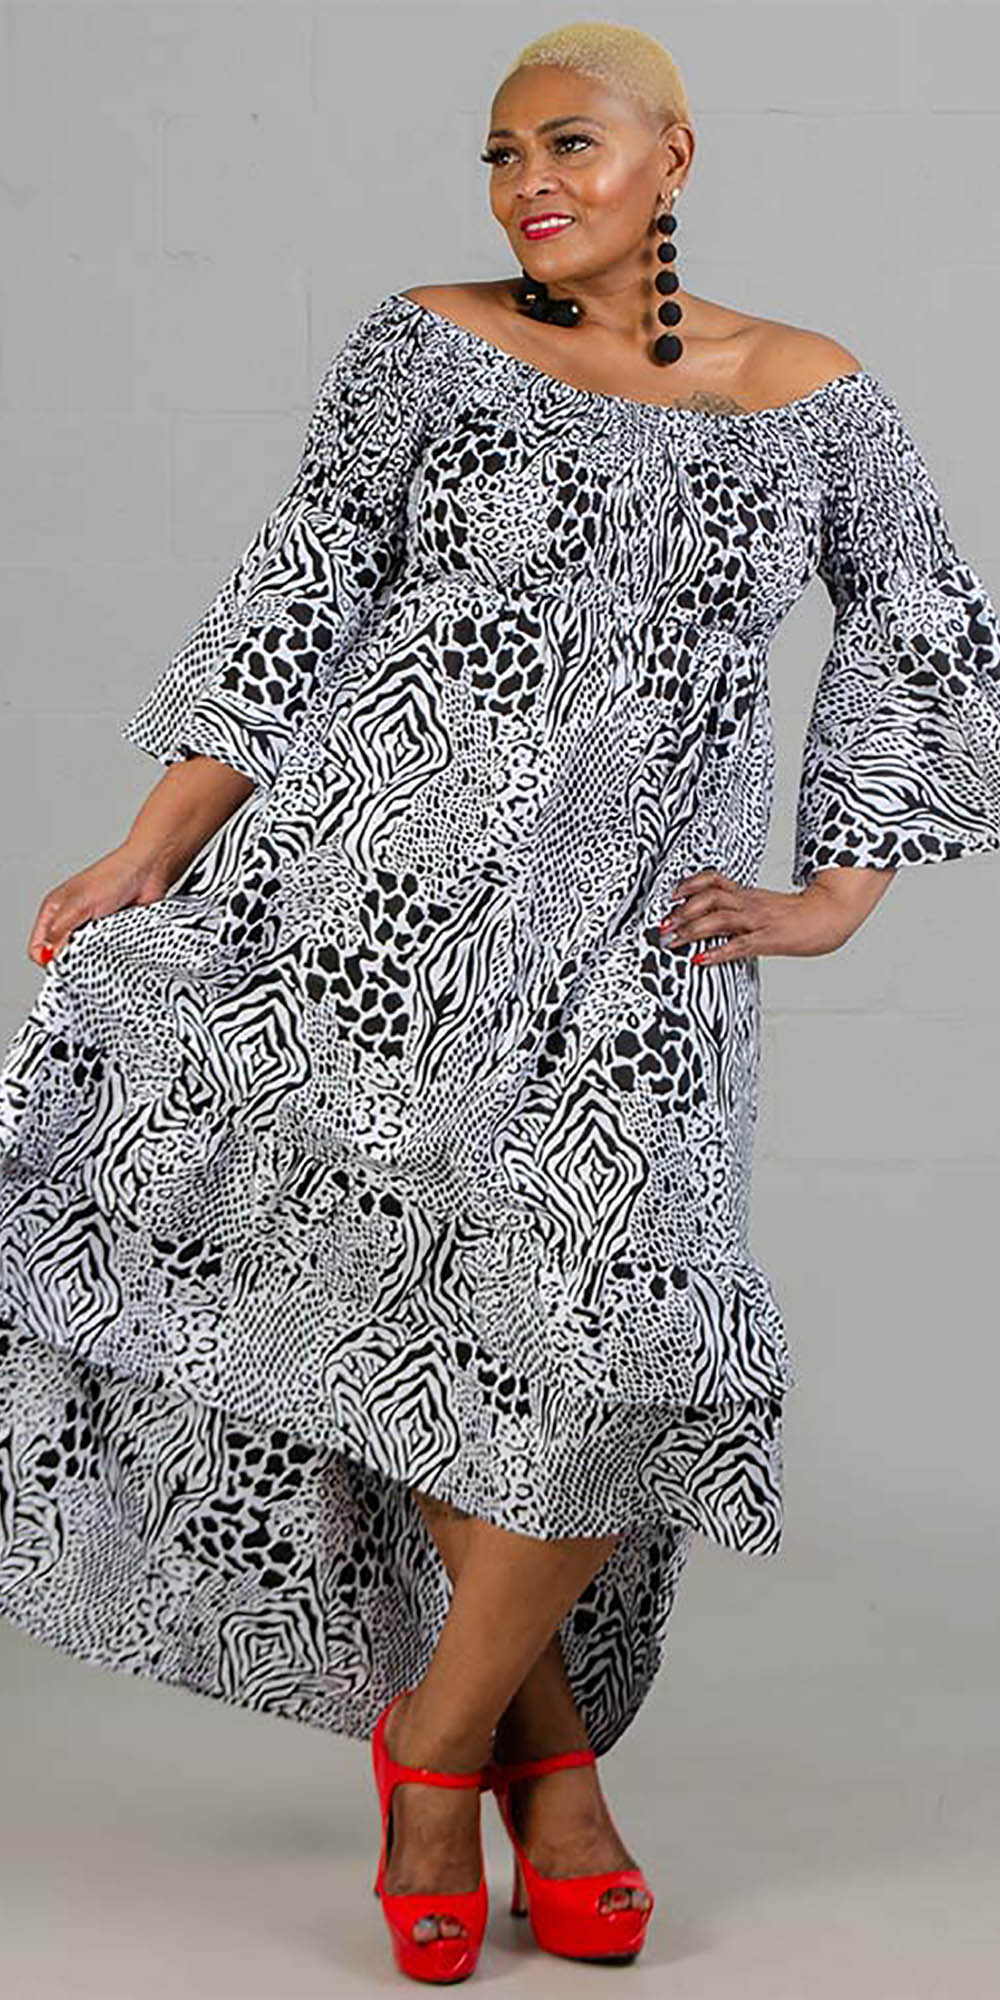 KaraChic 7552-Black White - Womens Bell Sleeve High-Low Smocked Dress In Print Design